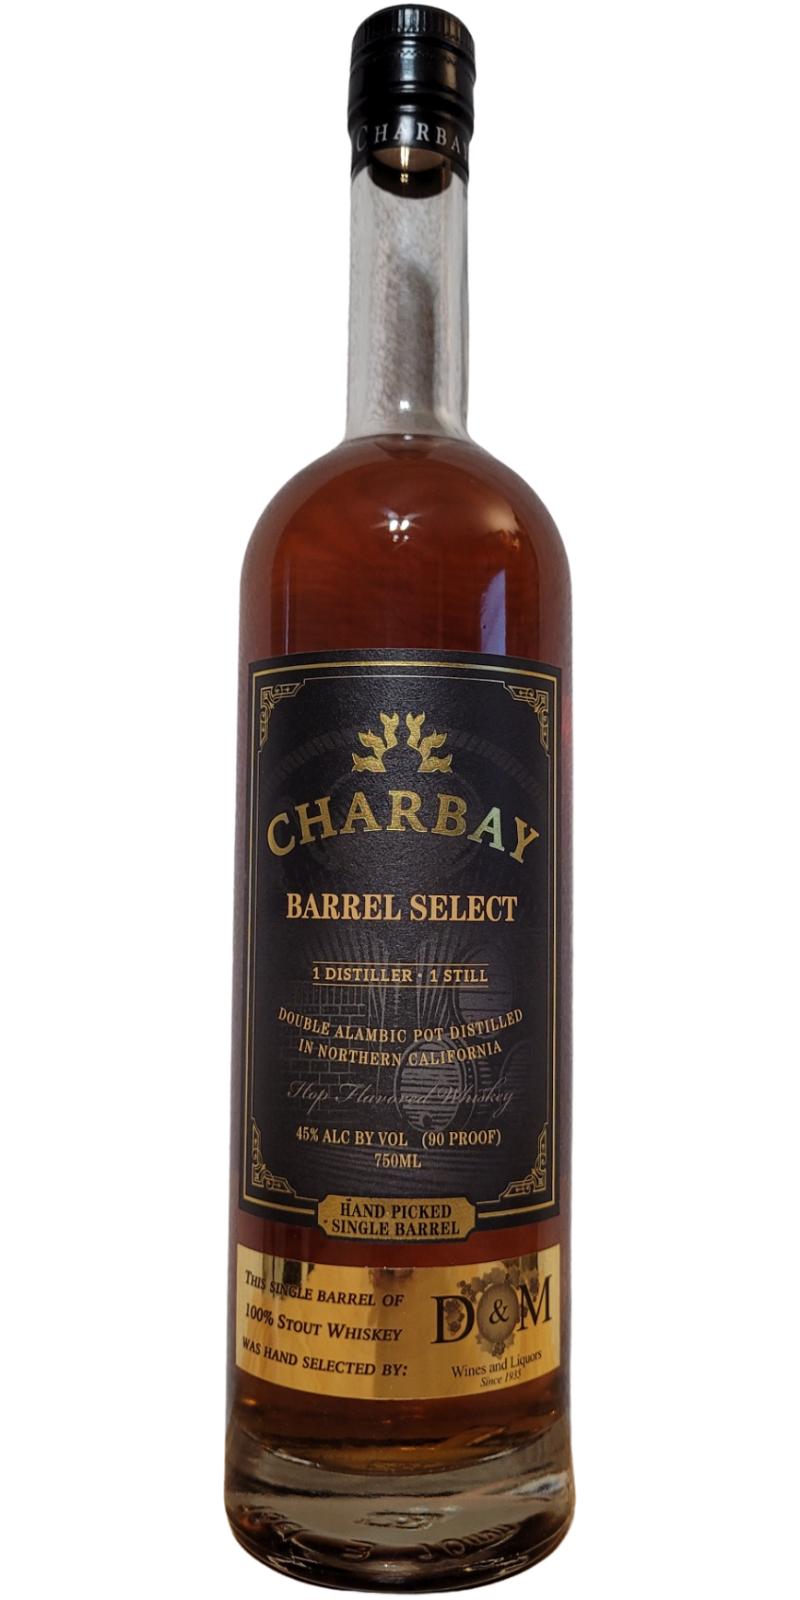 Charbay Single Barrel Barrel Select Charred New American Oak Barrel D&M Wines and Liquors 45% 750ml